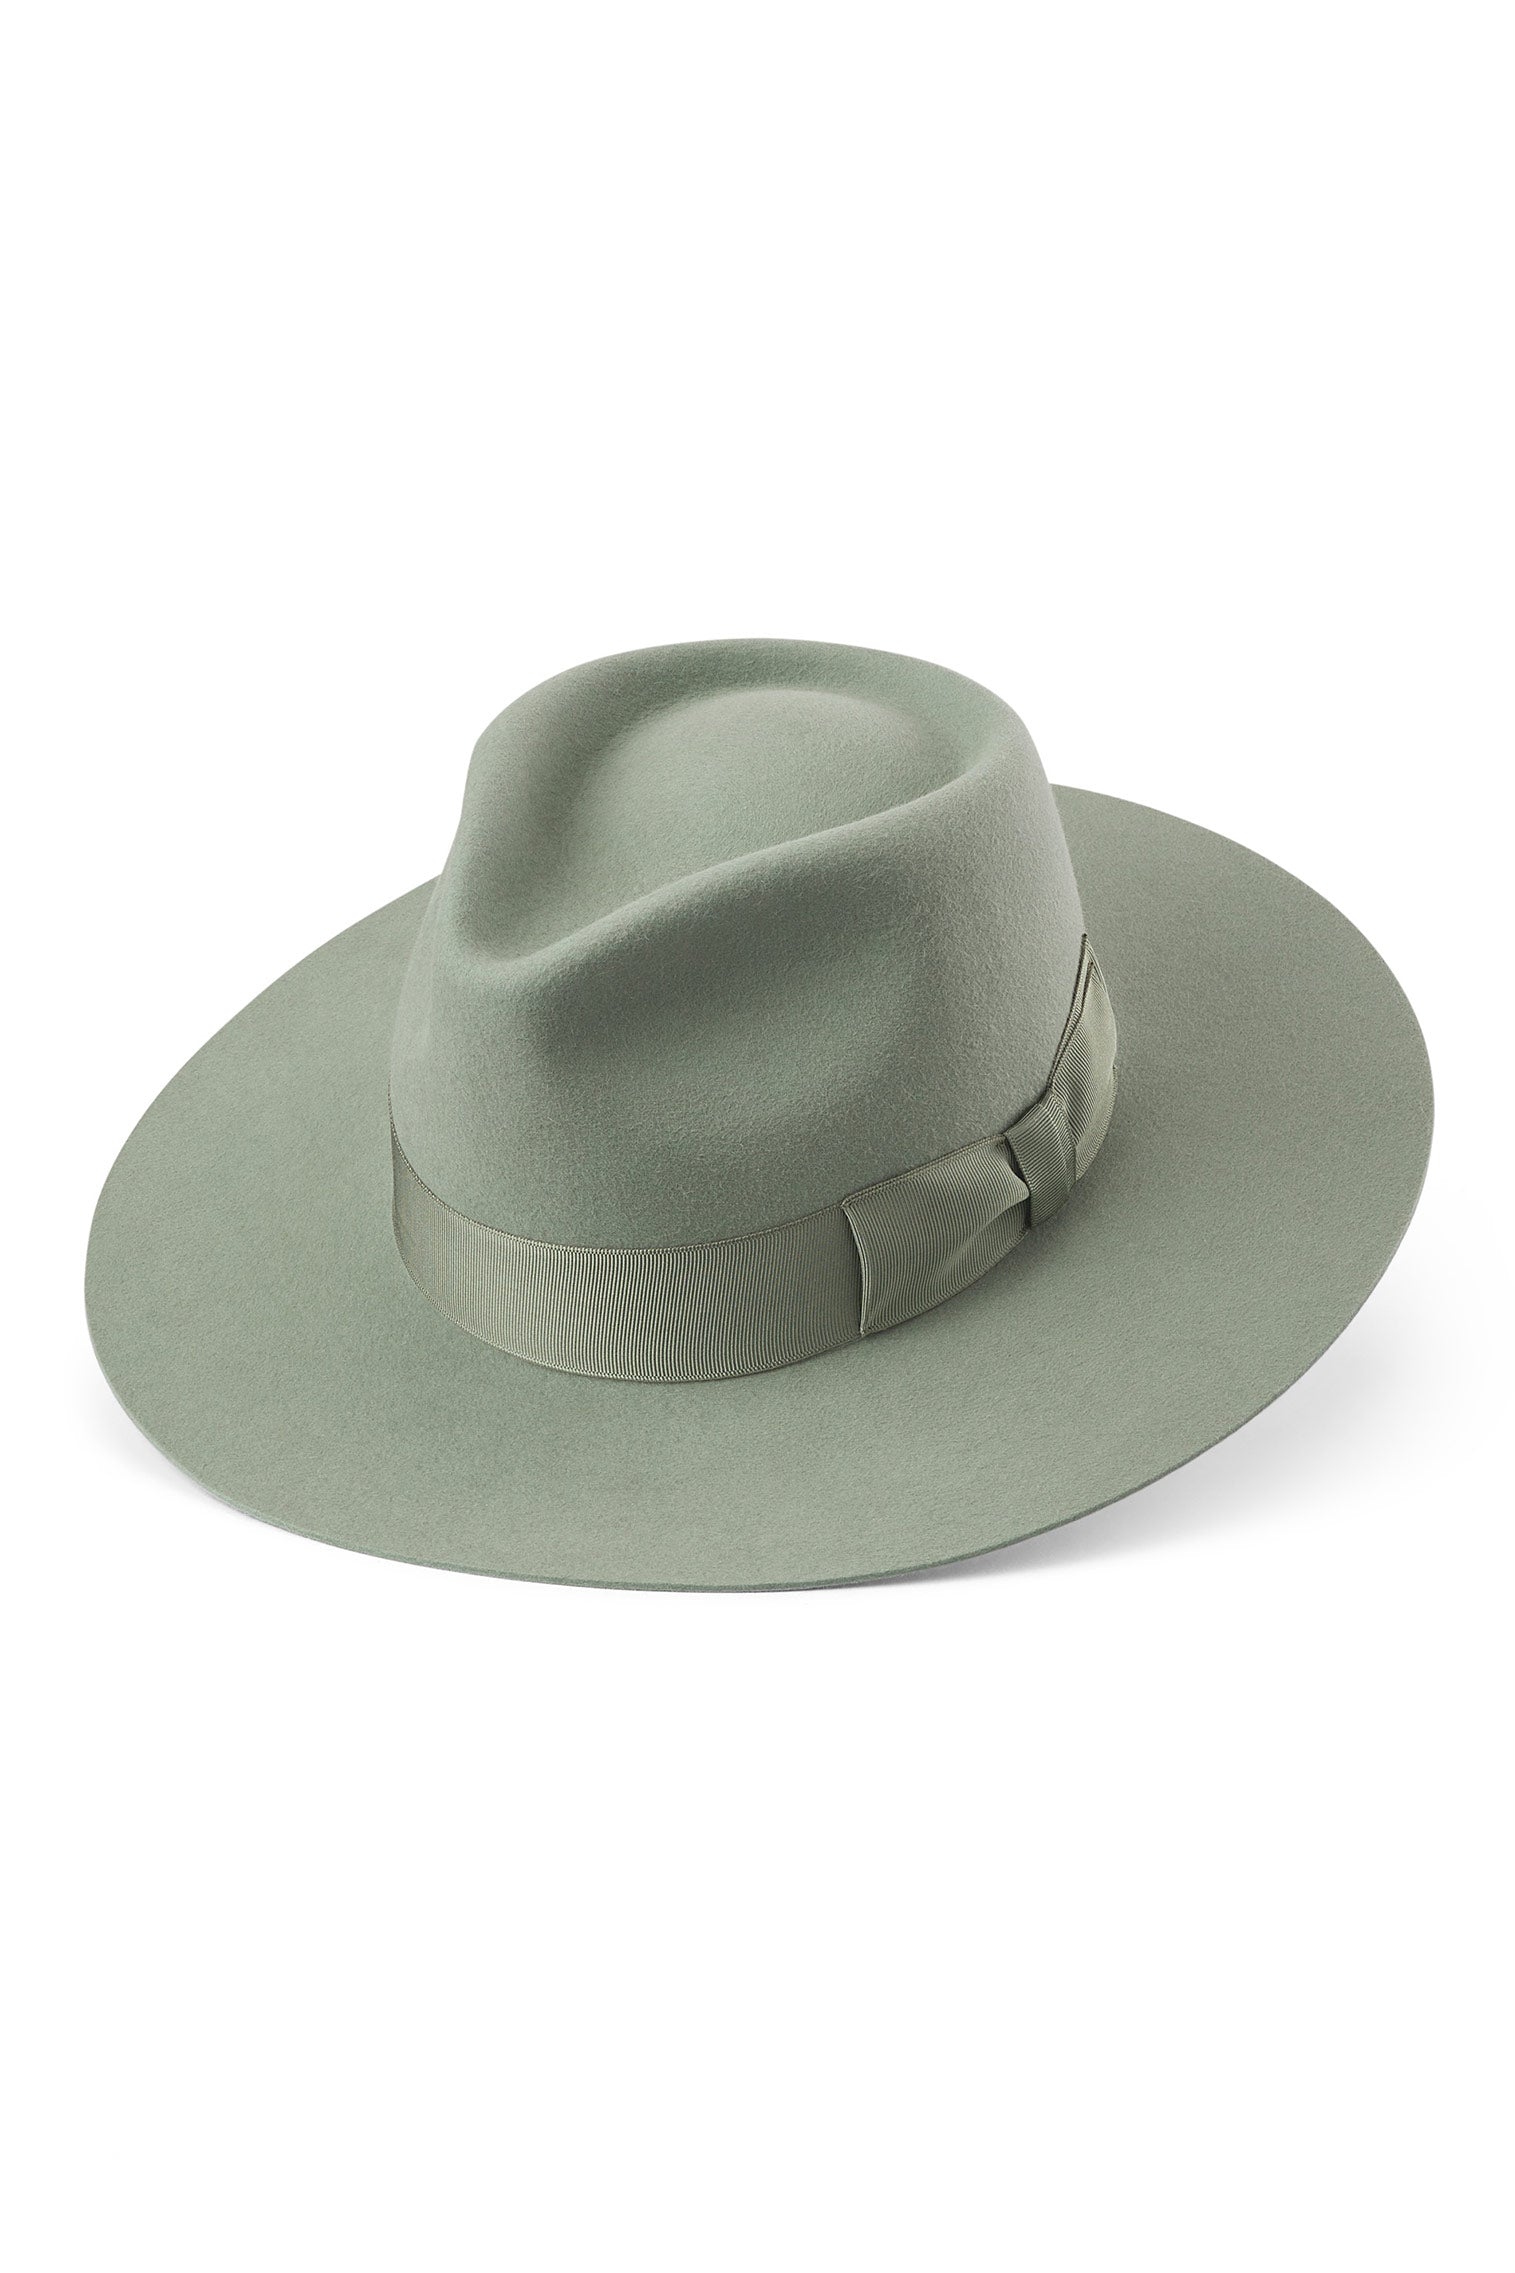 Toni Green Flat-Brim Fedora - Women’s Hats - Lock & Co. Hatters London UK